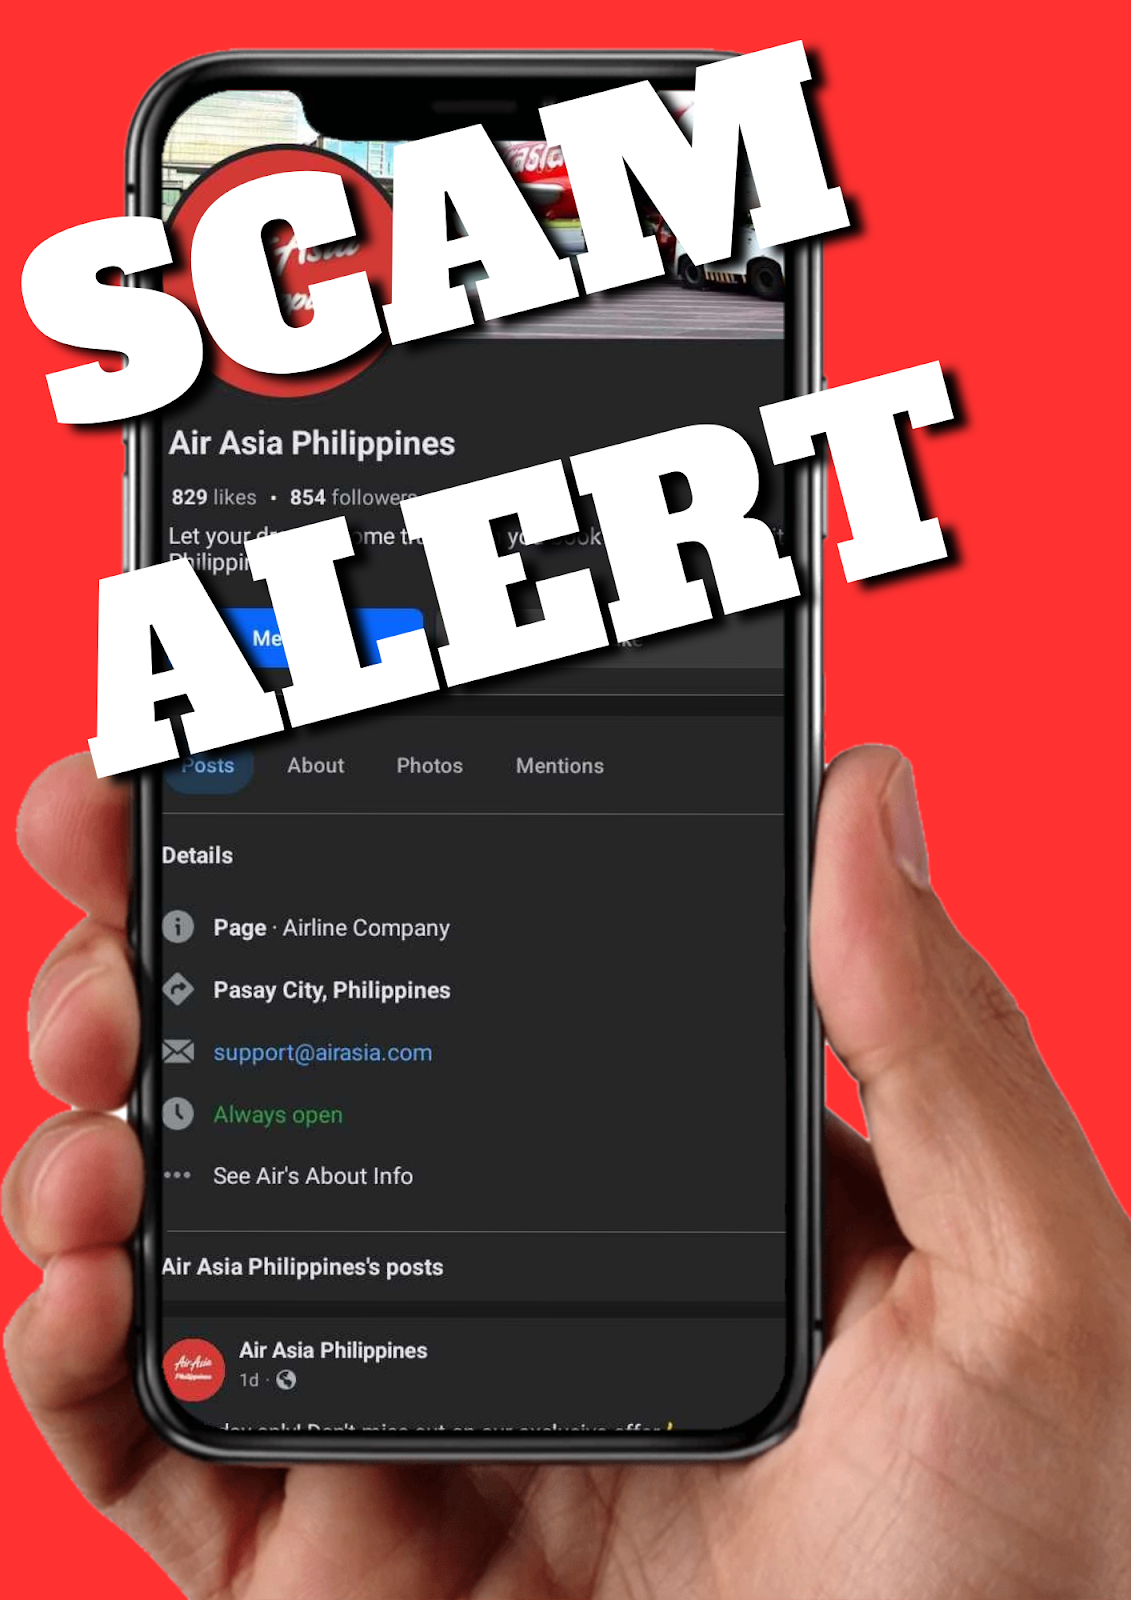 AirAsia Philippines warns against fake social media accounts